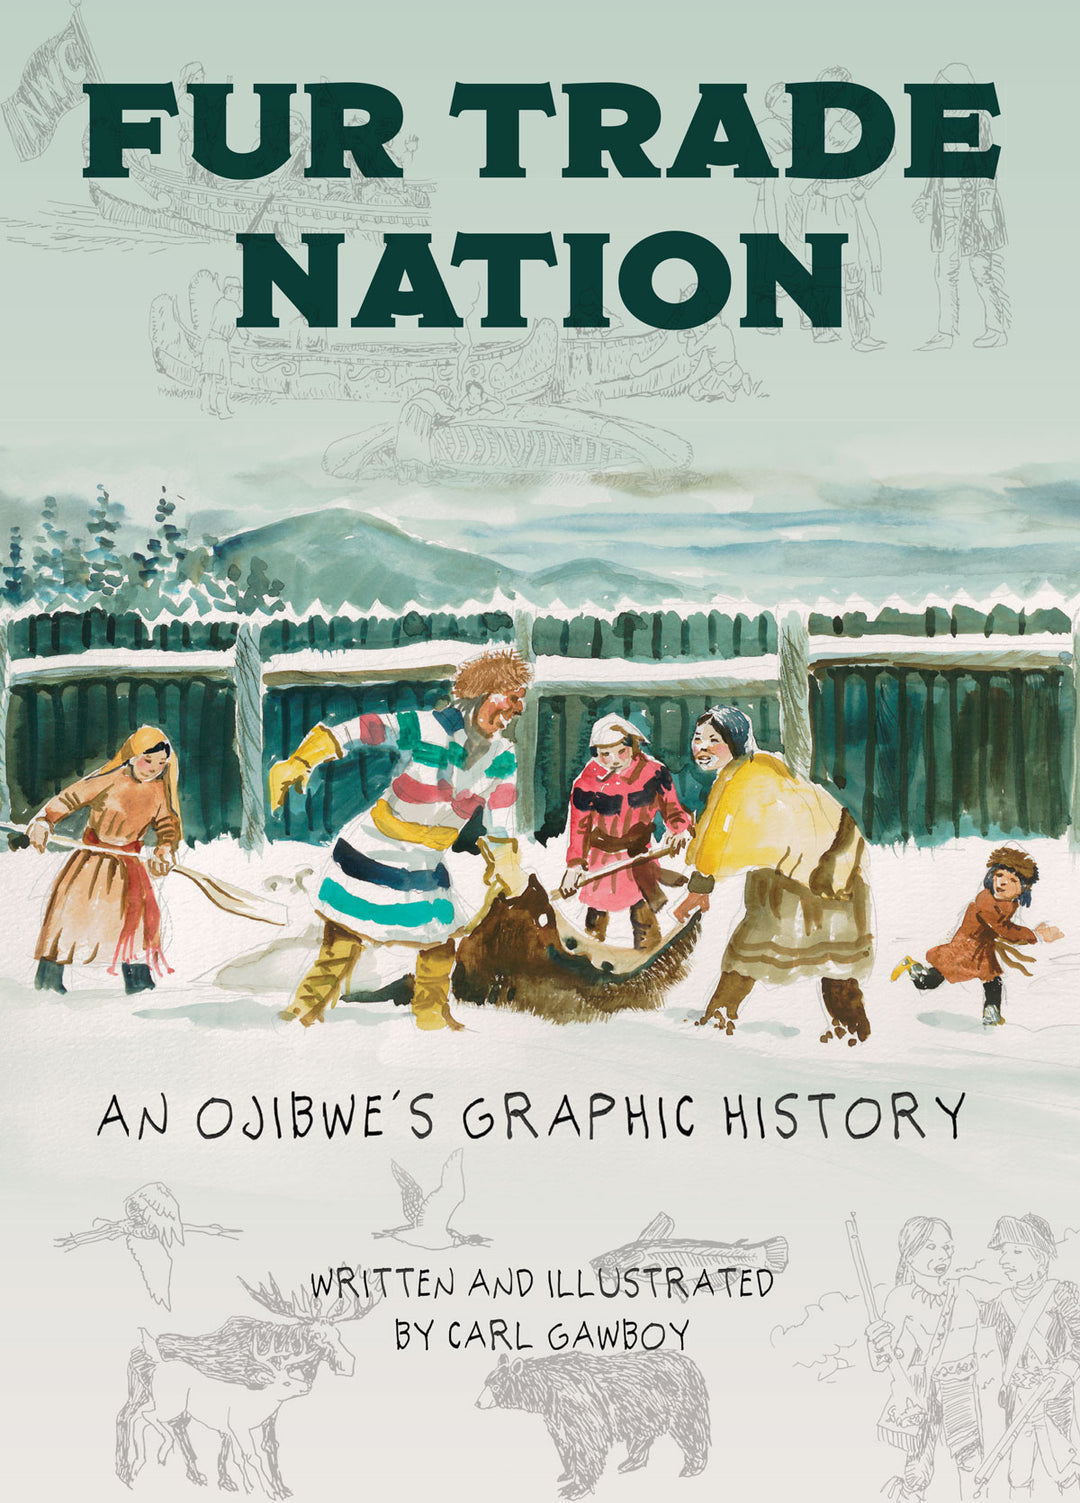 Fur Trade Nation: An Ojibwe's Graphic History by Carl Gawboy